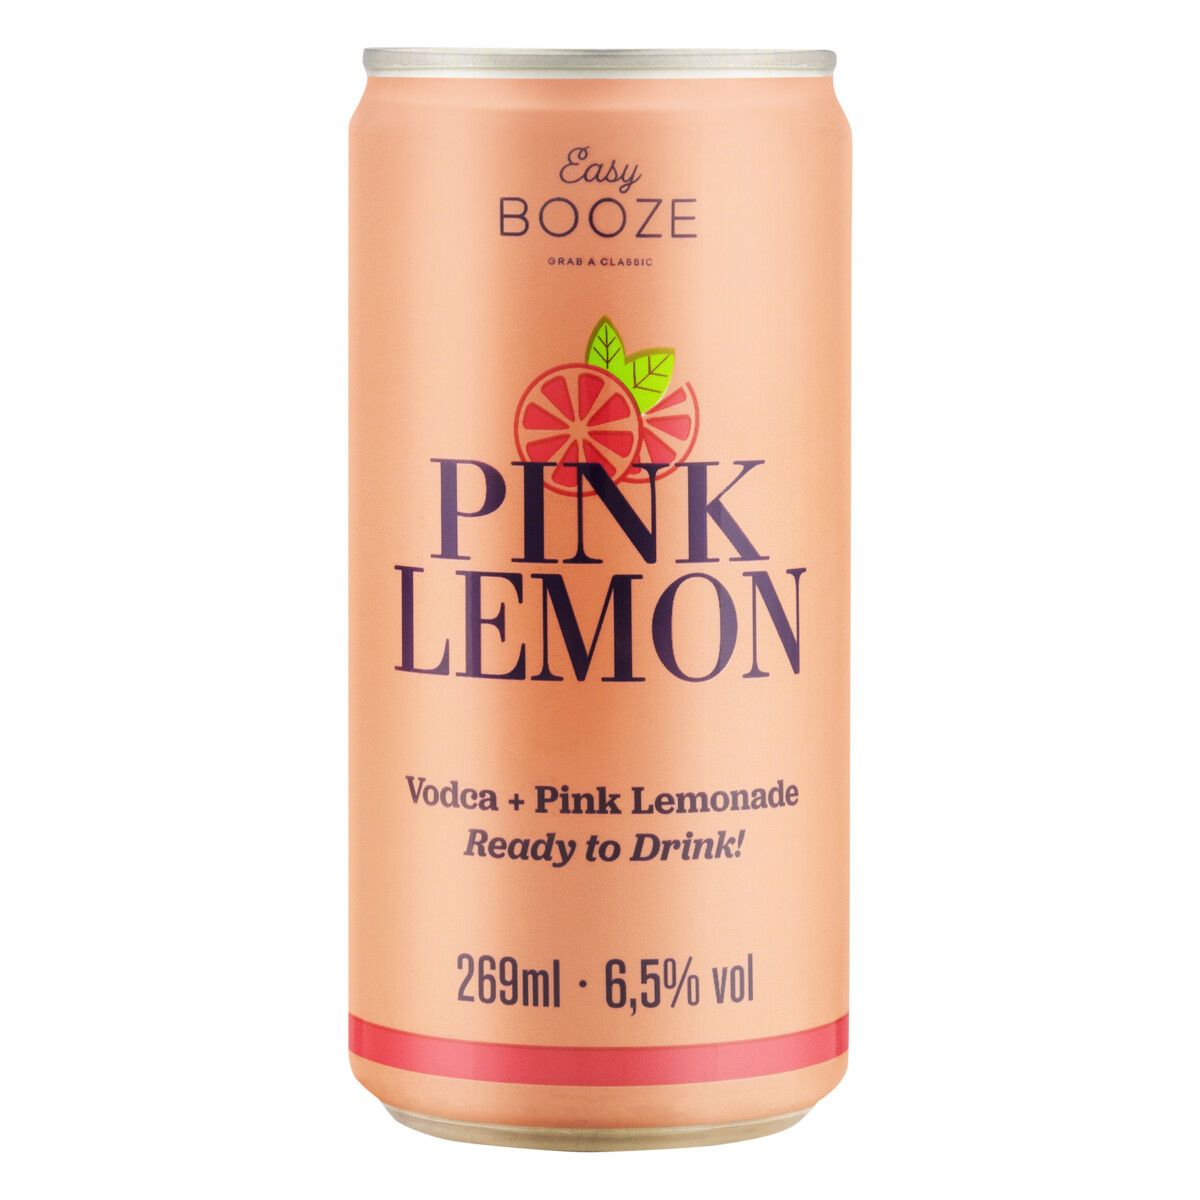 Bebida Mista Alcoólica Gaseificada Vodca + Pink Lemonade Easy Booze Lata 269ml image number 0